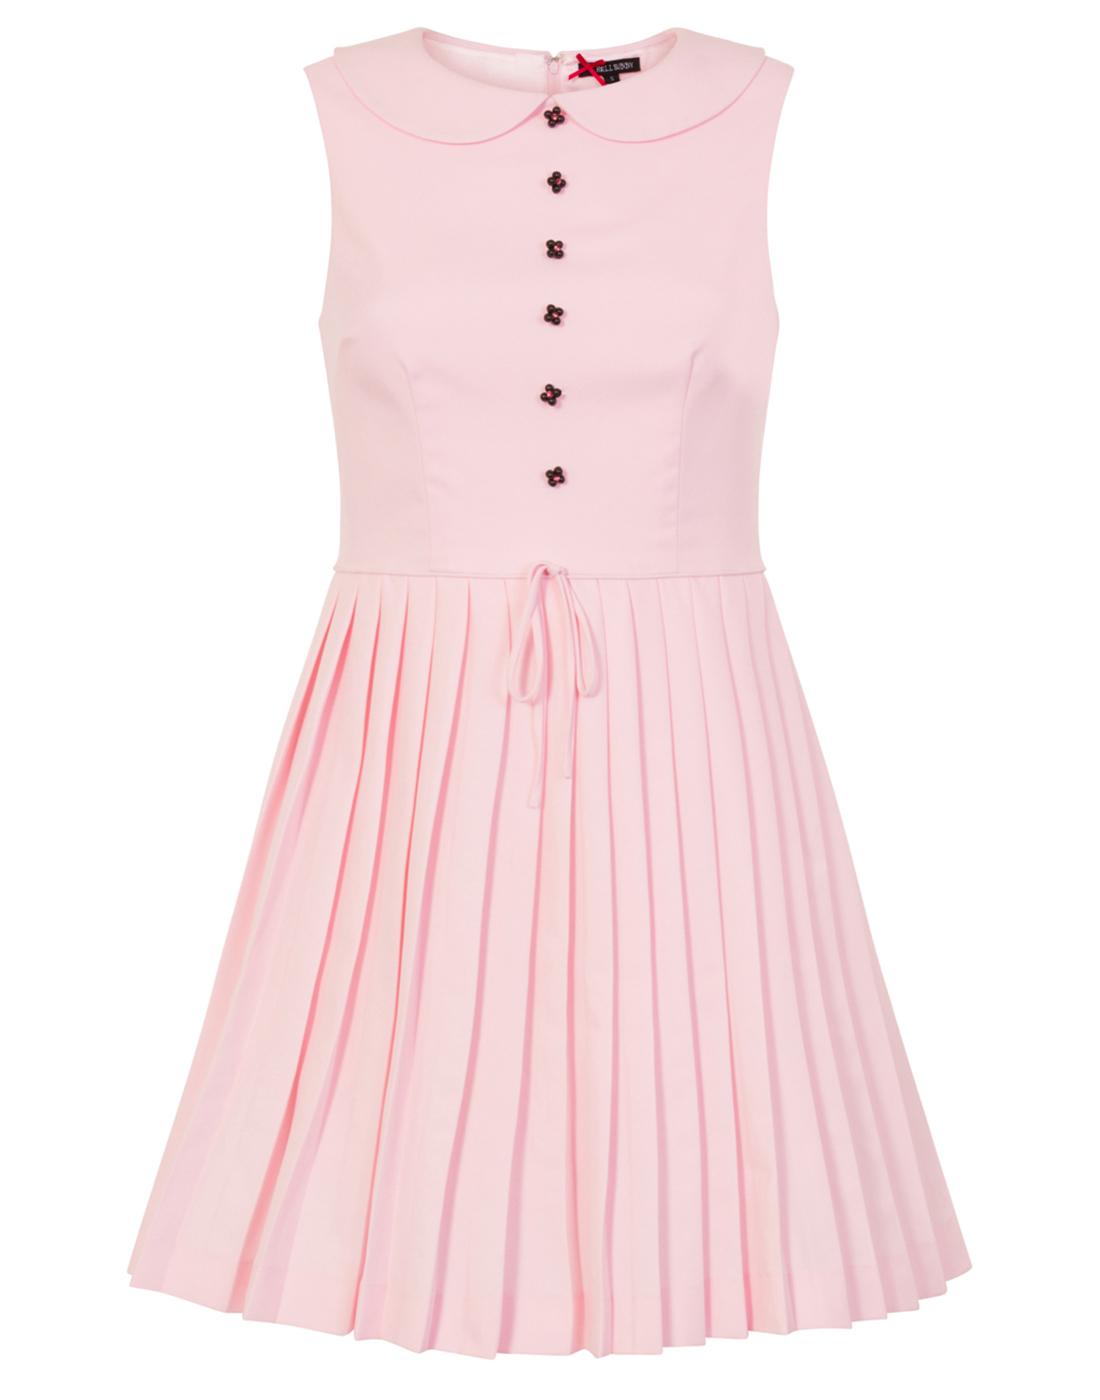 HELL BUNNY Josephine Retro 60s Mod Mini Dress in Pink